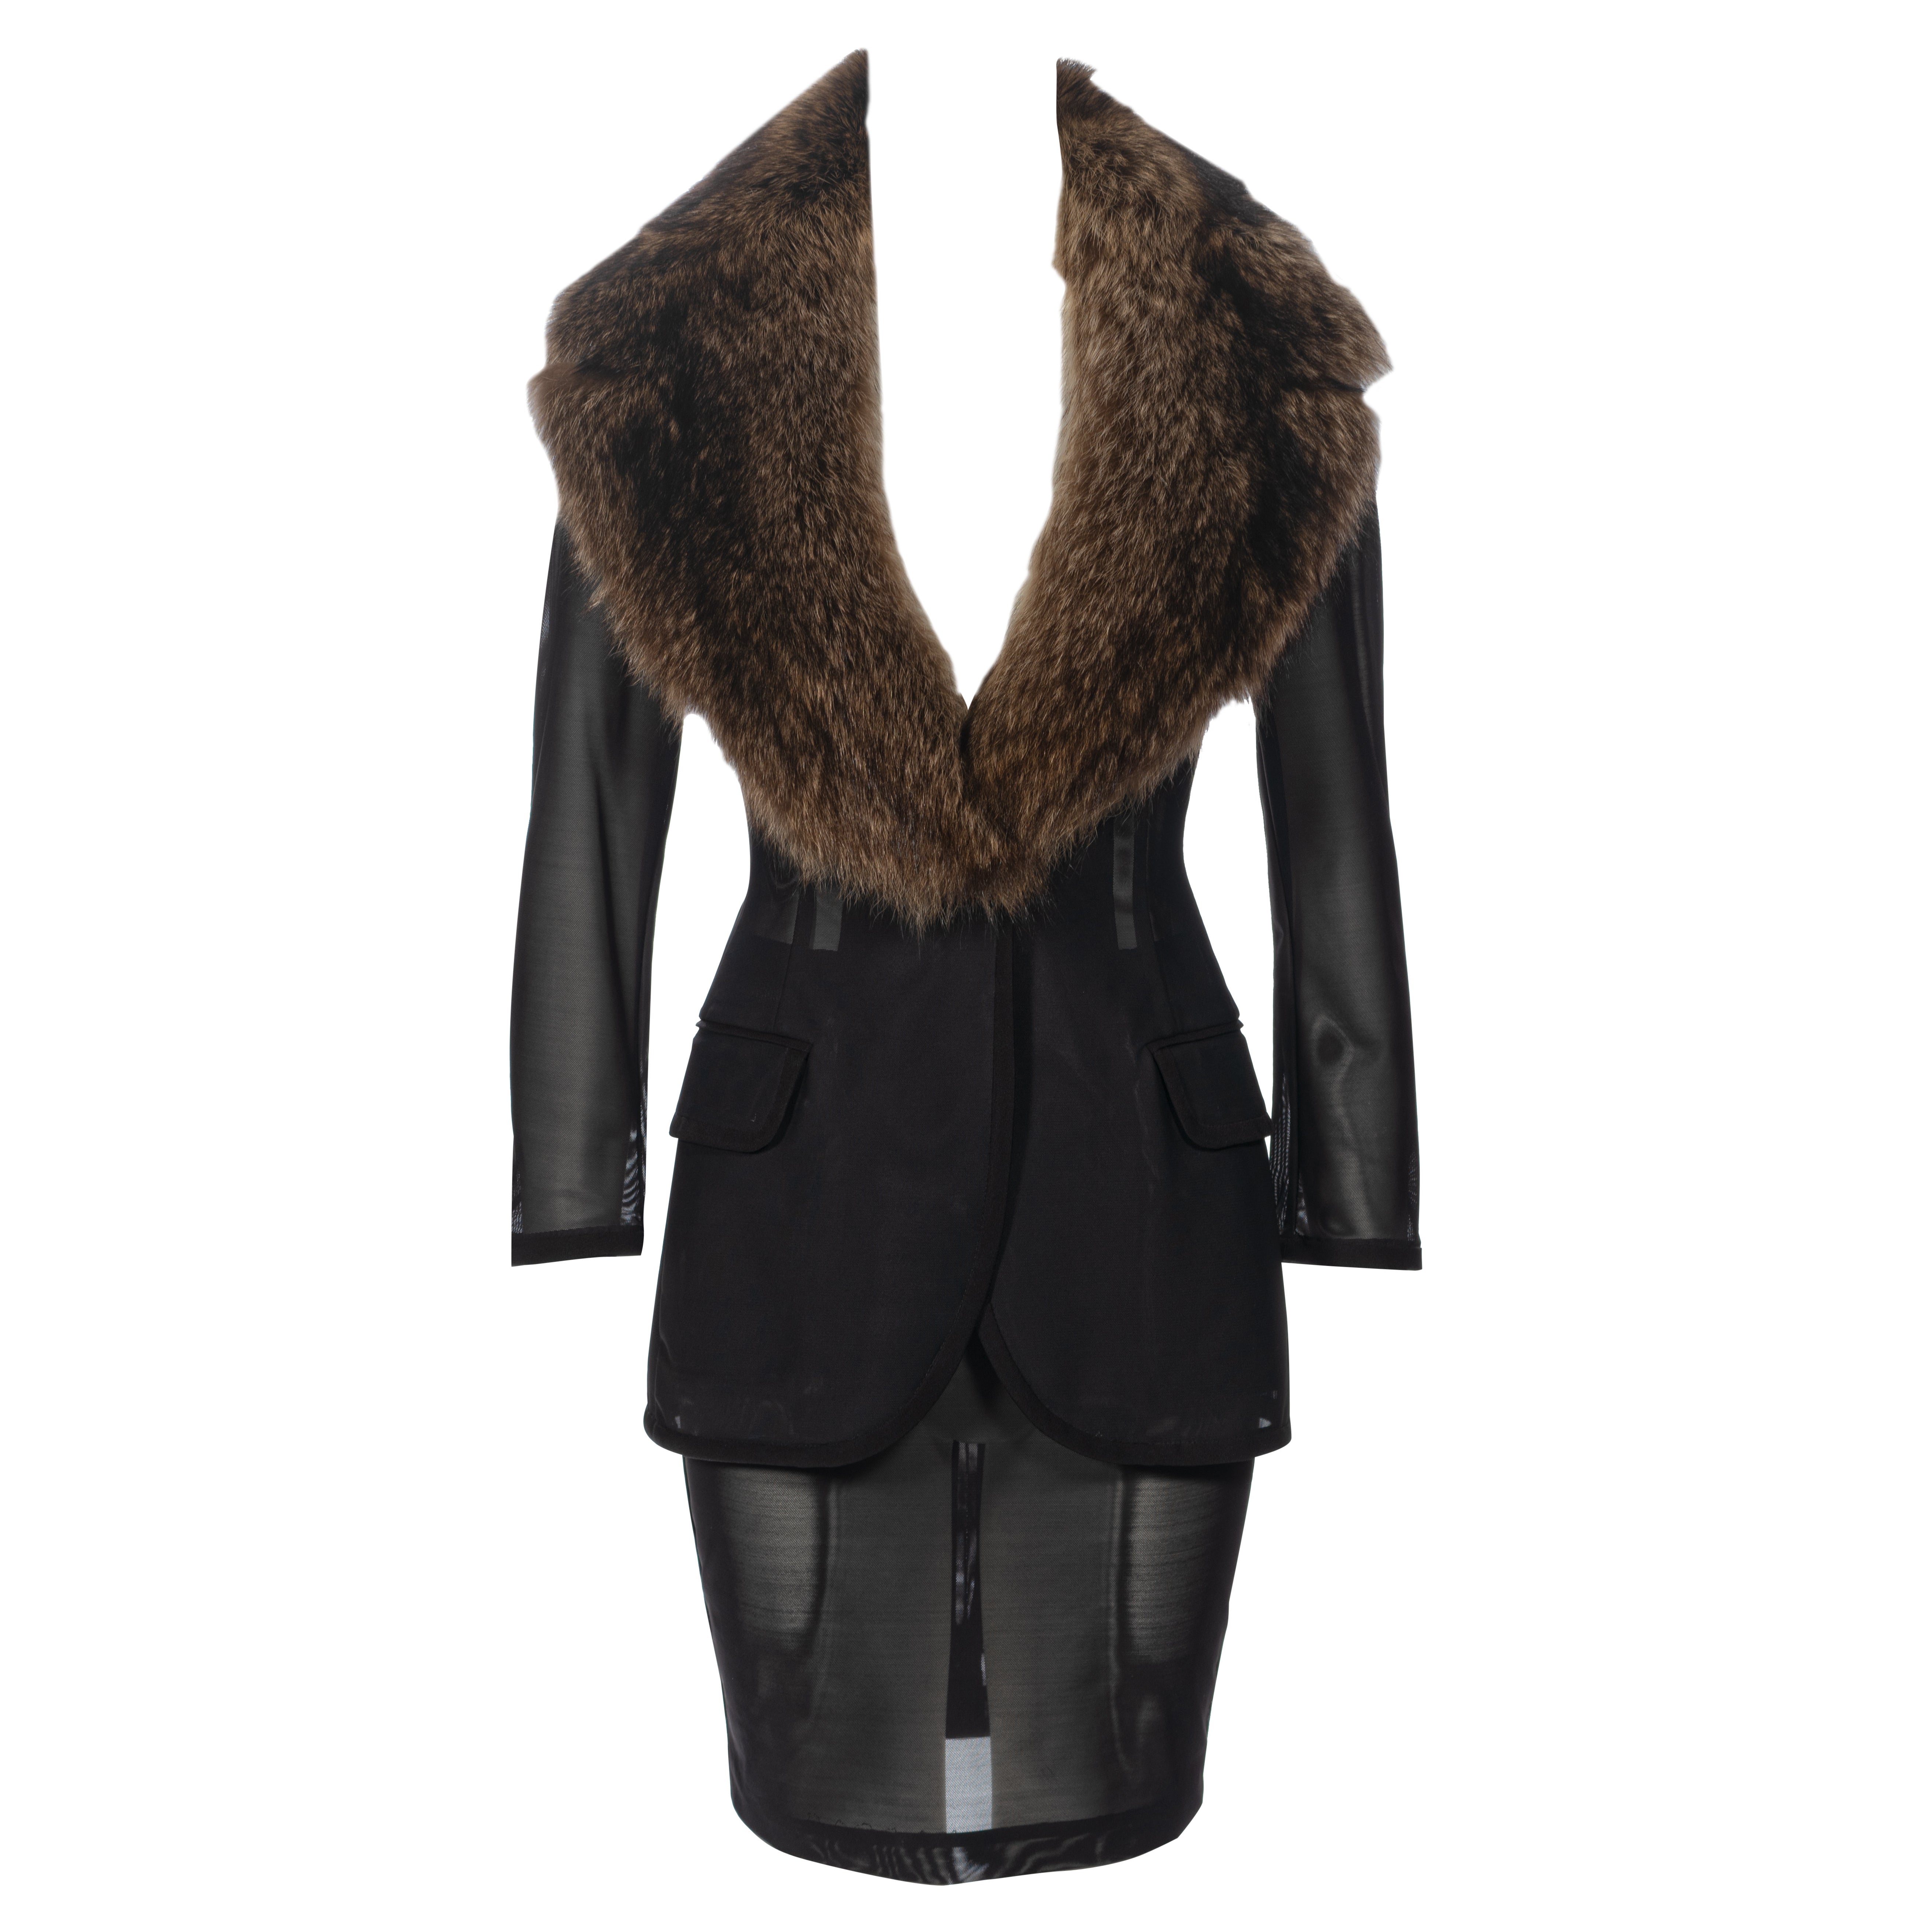 Dolce & Gabbana Black Power Net Skirt Suit with Fur Collar, fw 1995